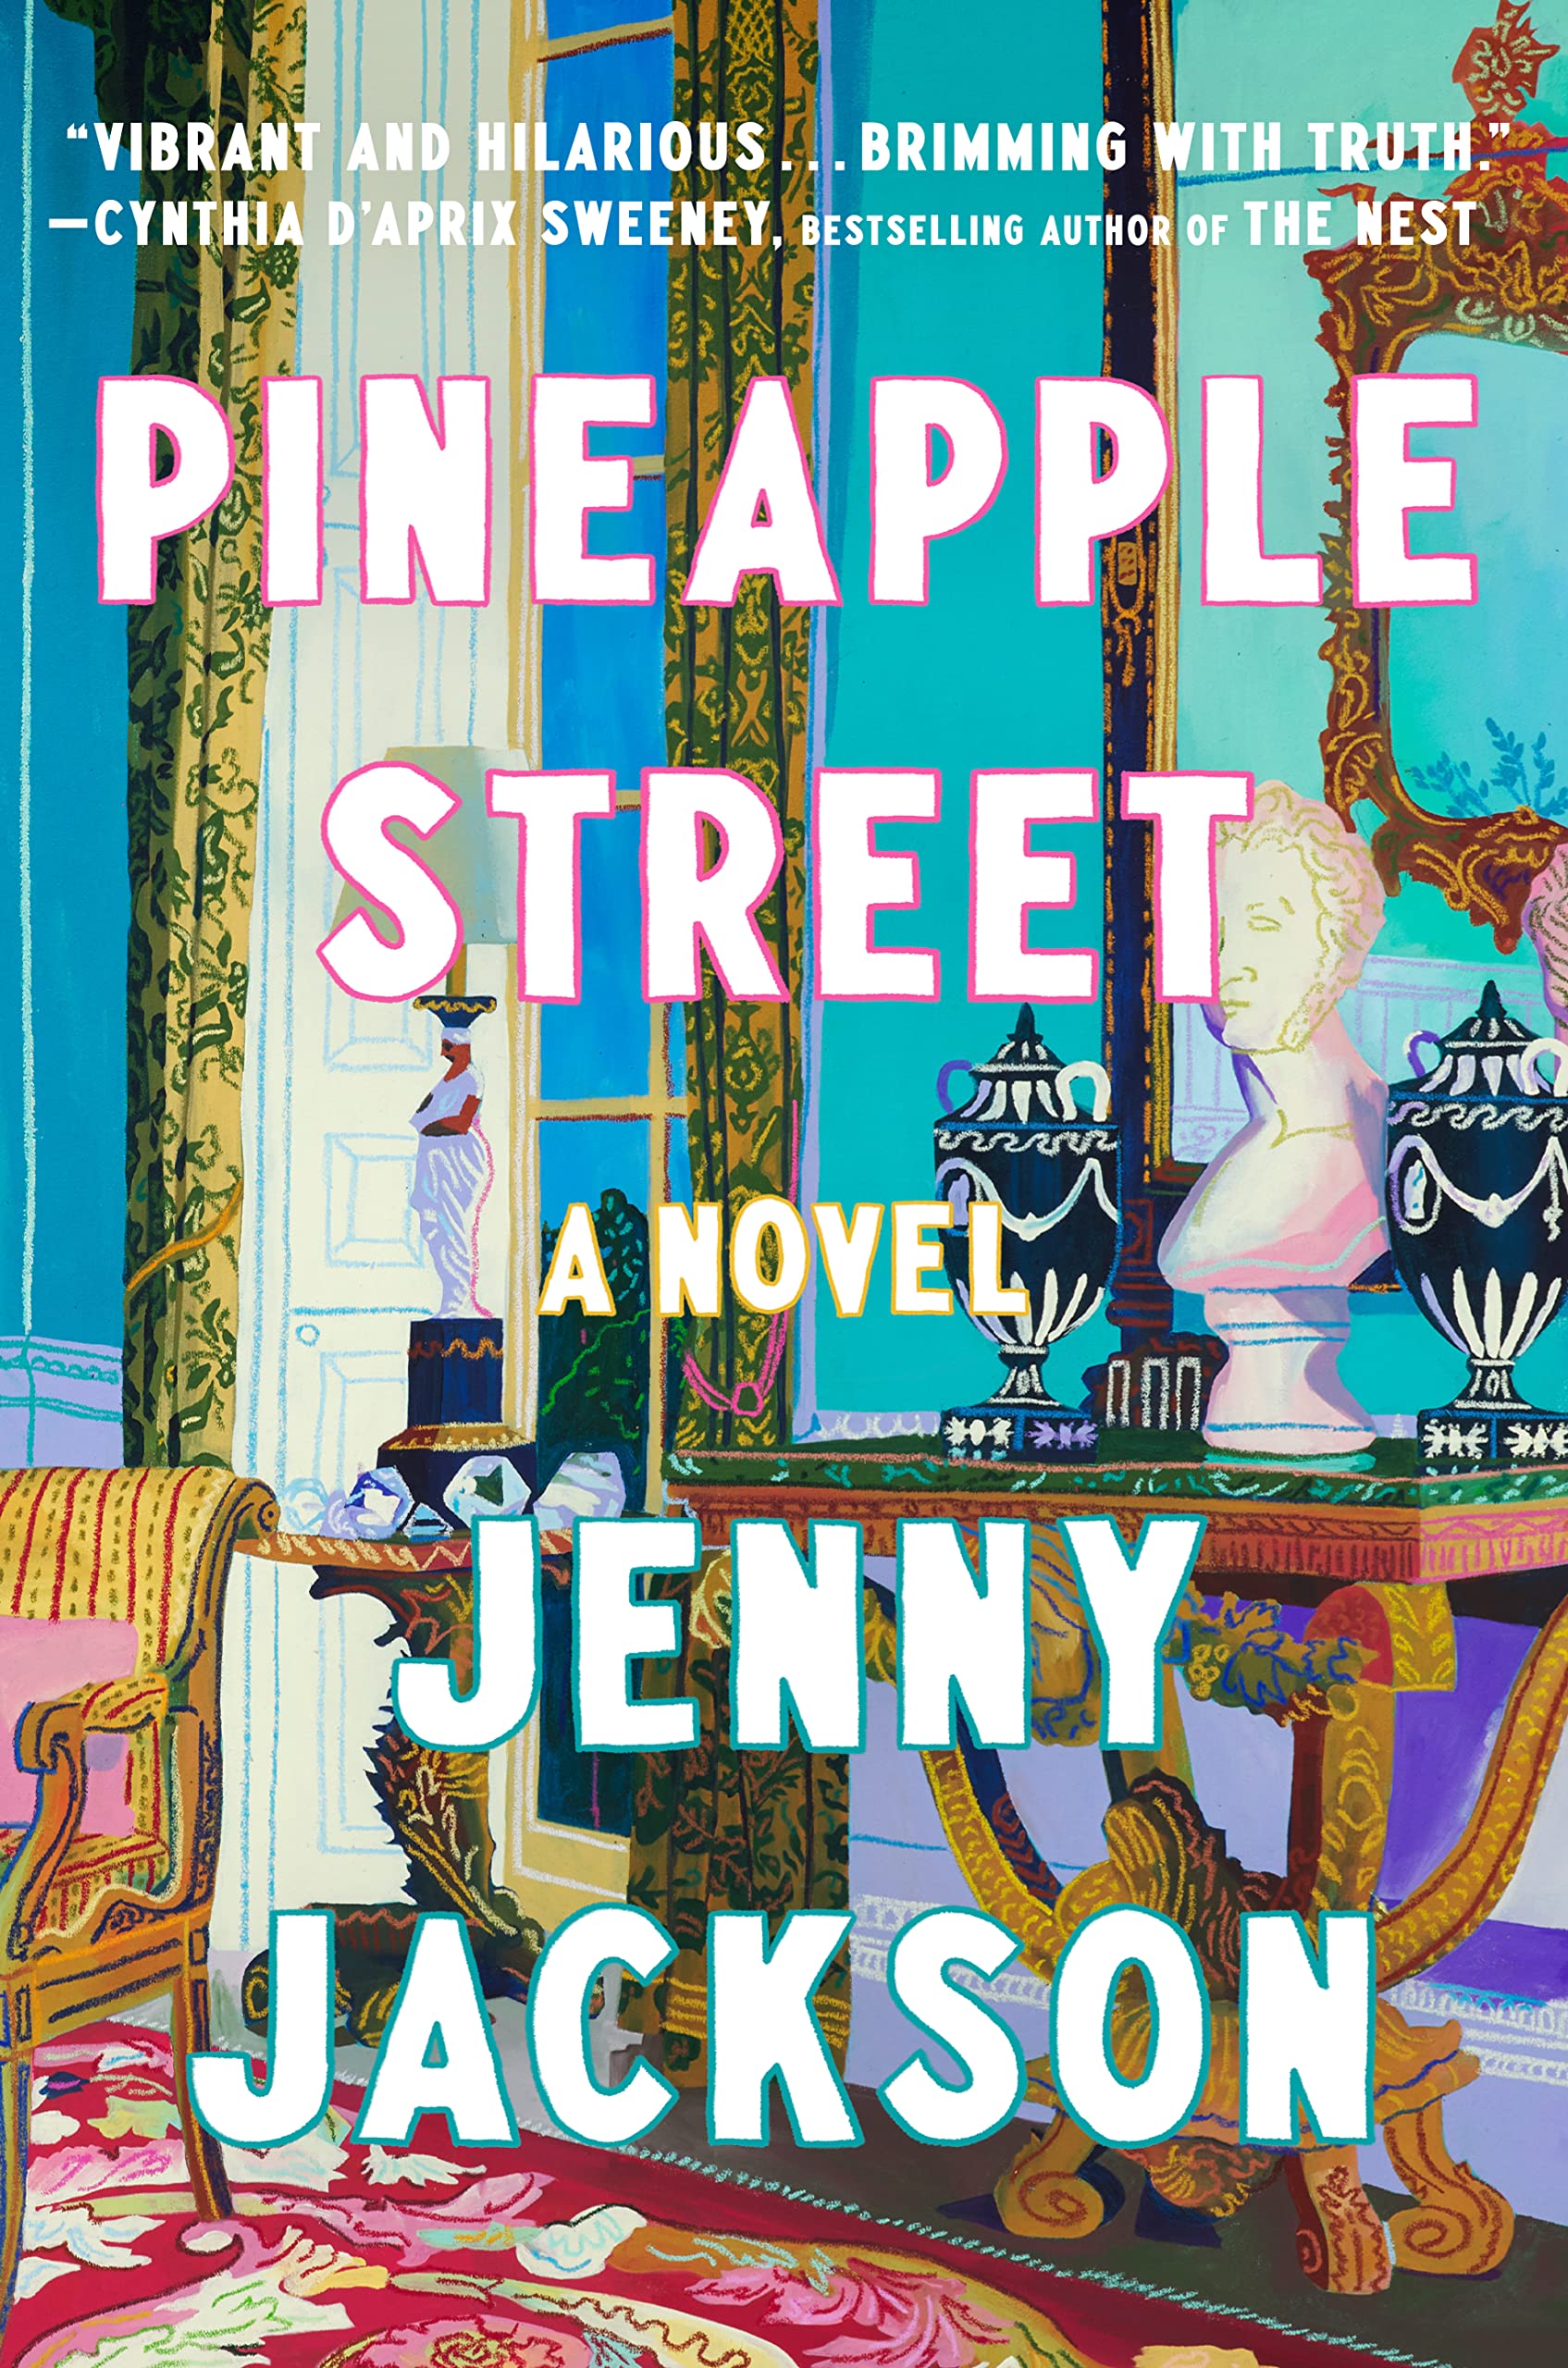 New Books for Spring: Pineapple Street - SavvyMom